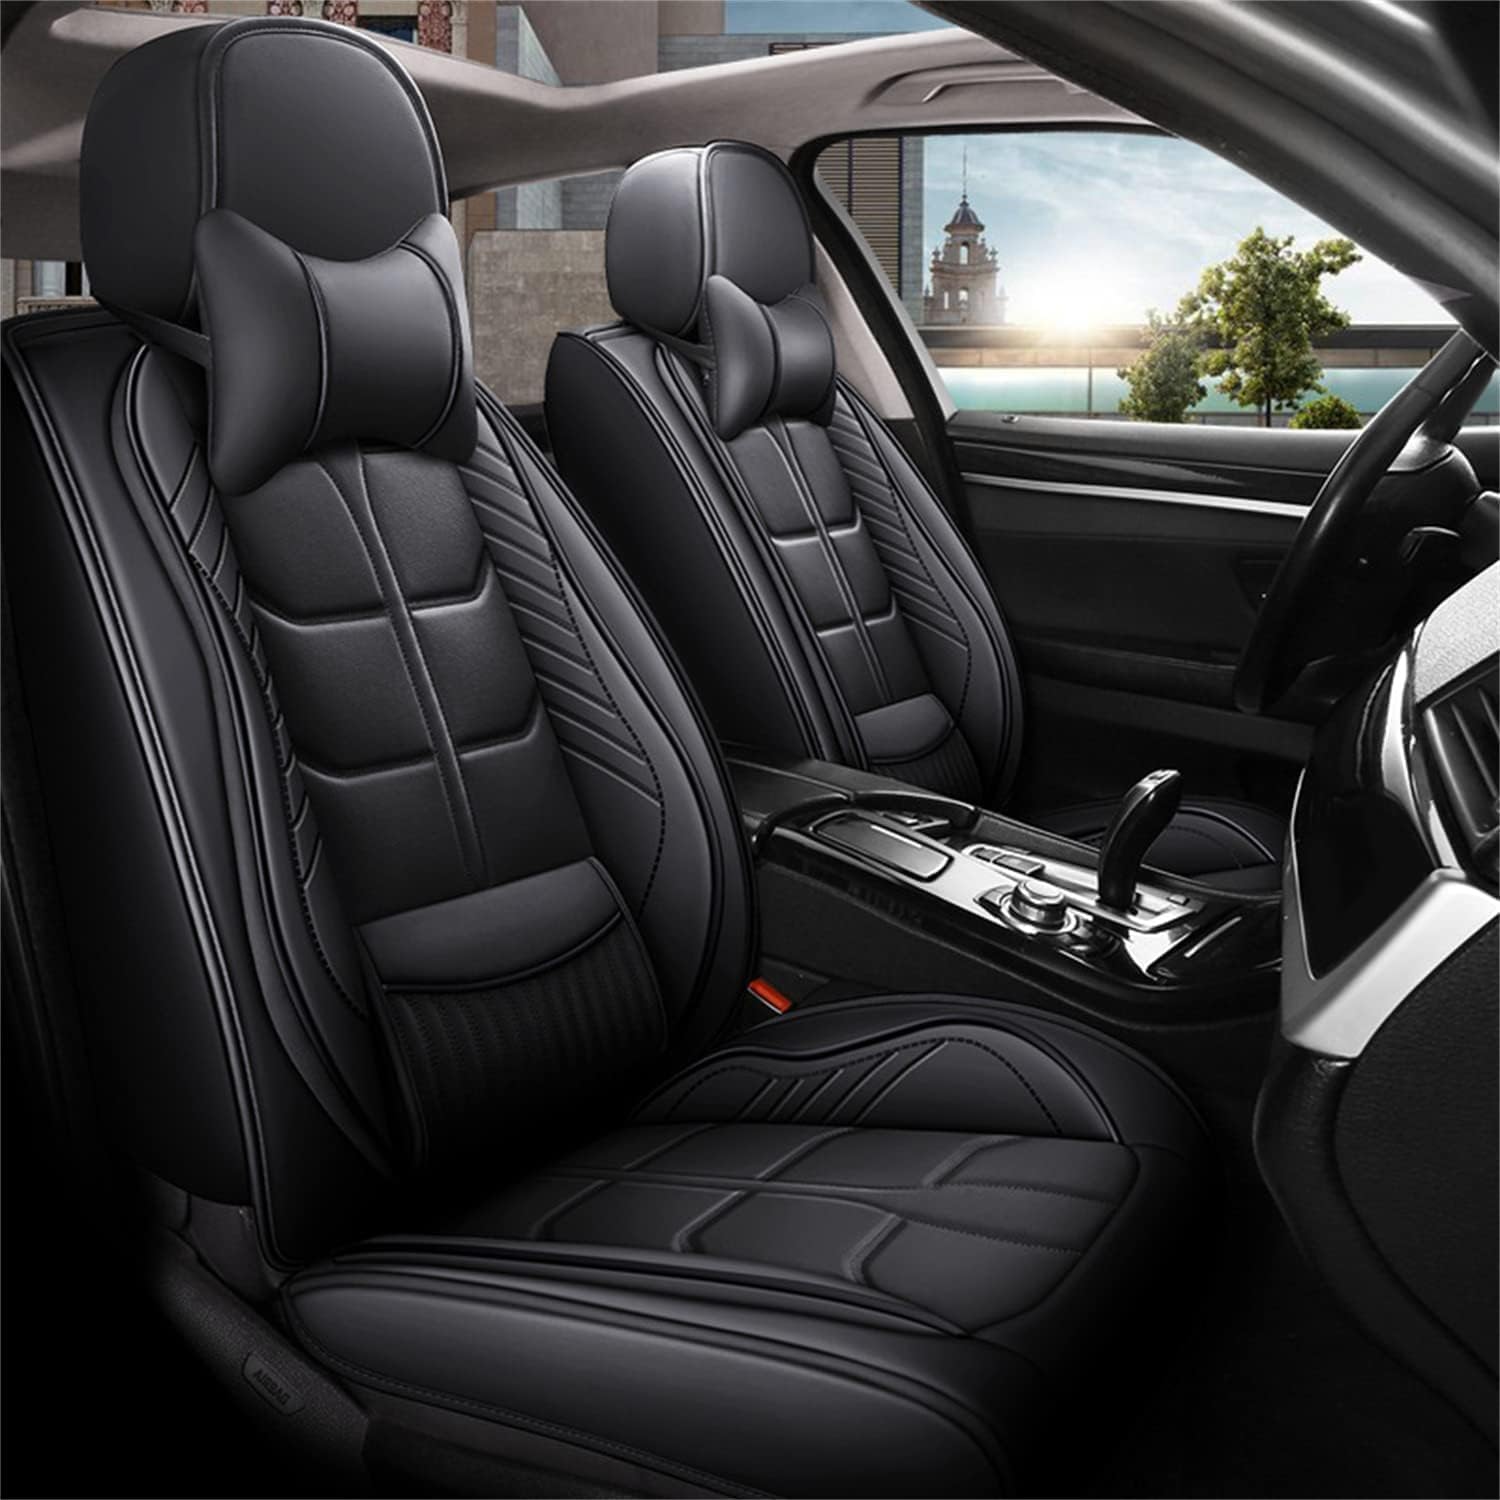 NPORT Auto PU-Leder Sitzbezüge Sets für Mazda CX-9 1. Generation 2007-2015, Komfortabler Dauerhafter Sitzbezug Vordersitze Rücksitze Autositzschoner,A/Black-Nopillow von NPORT